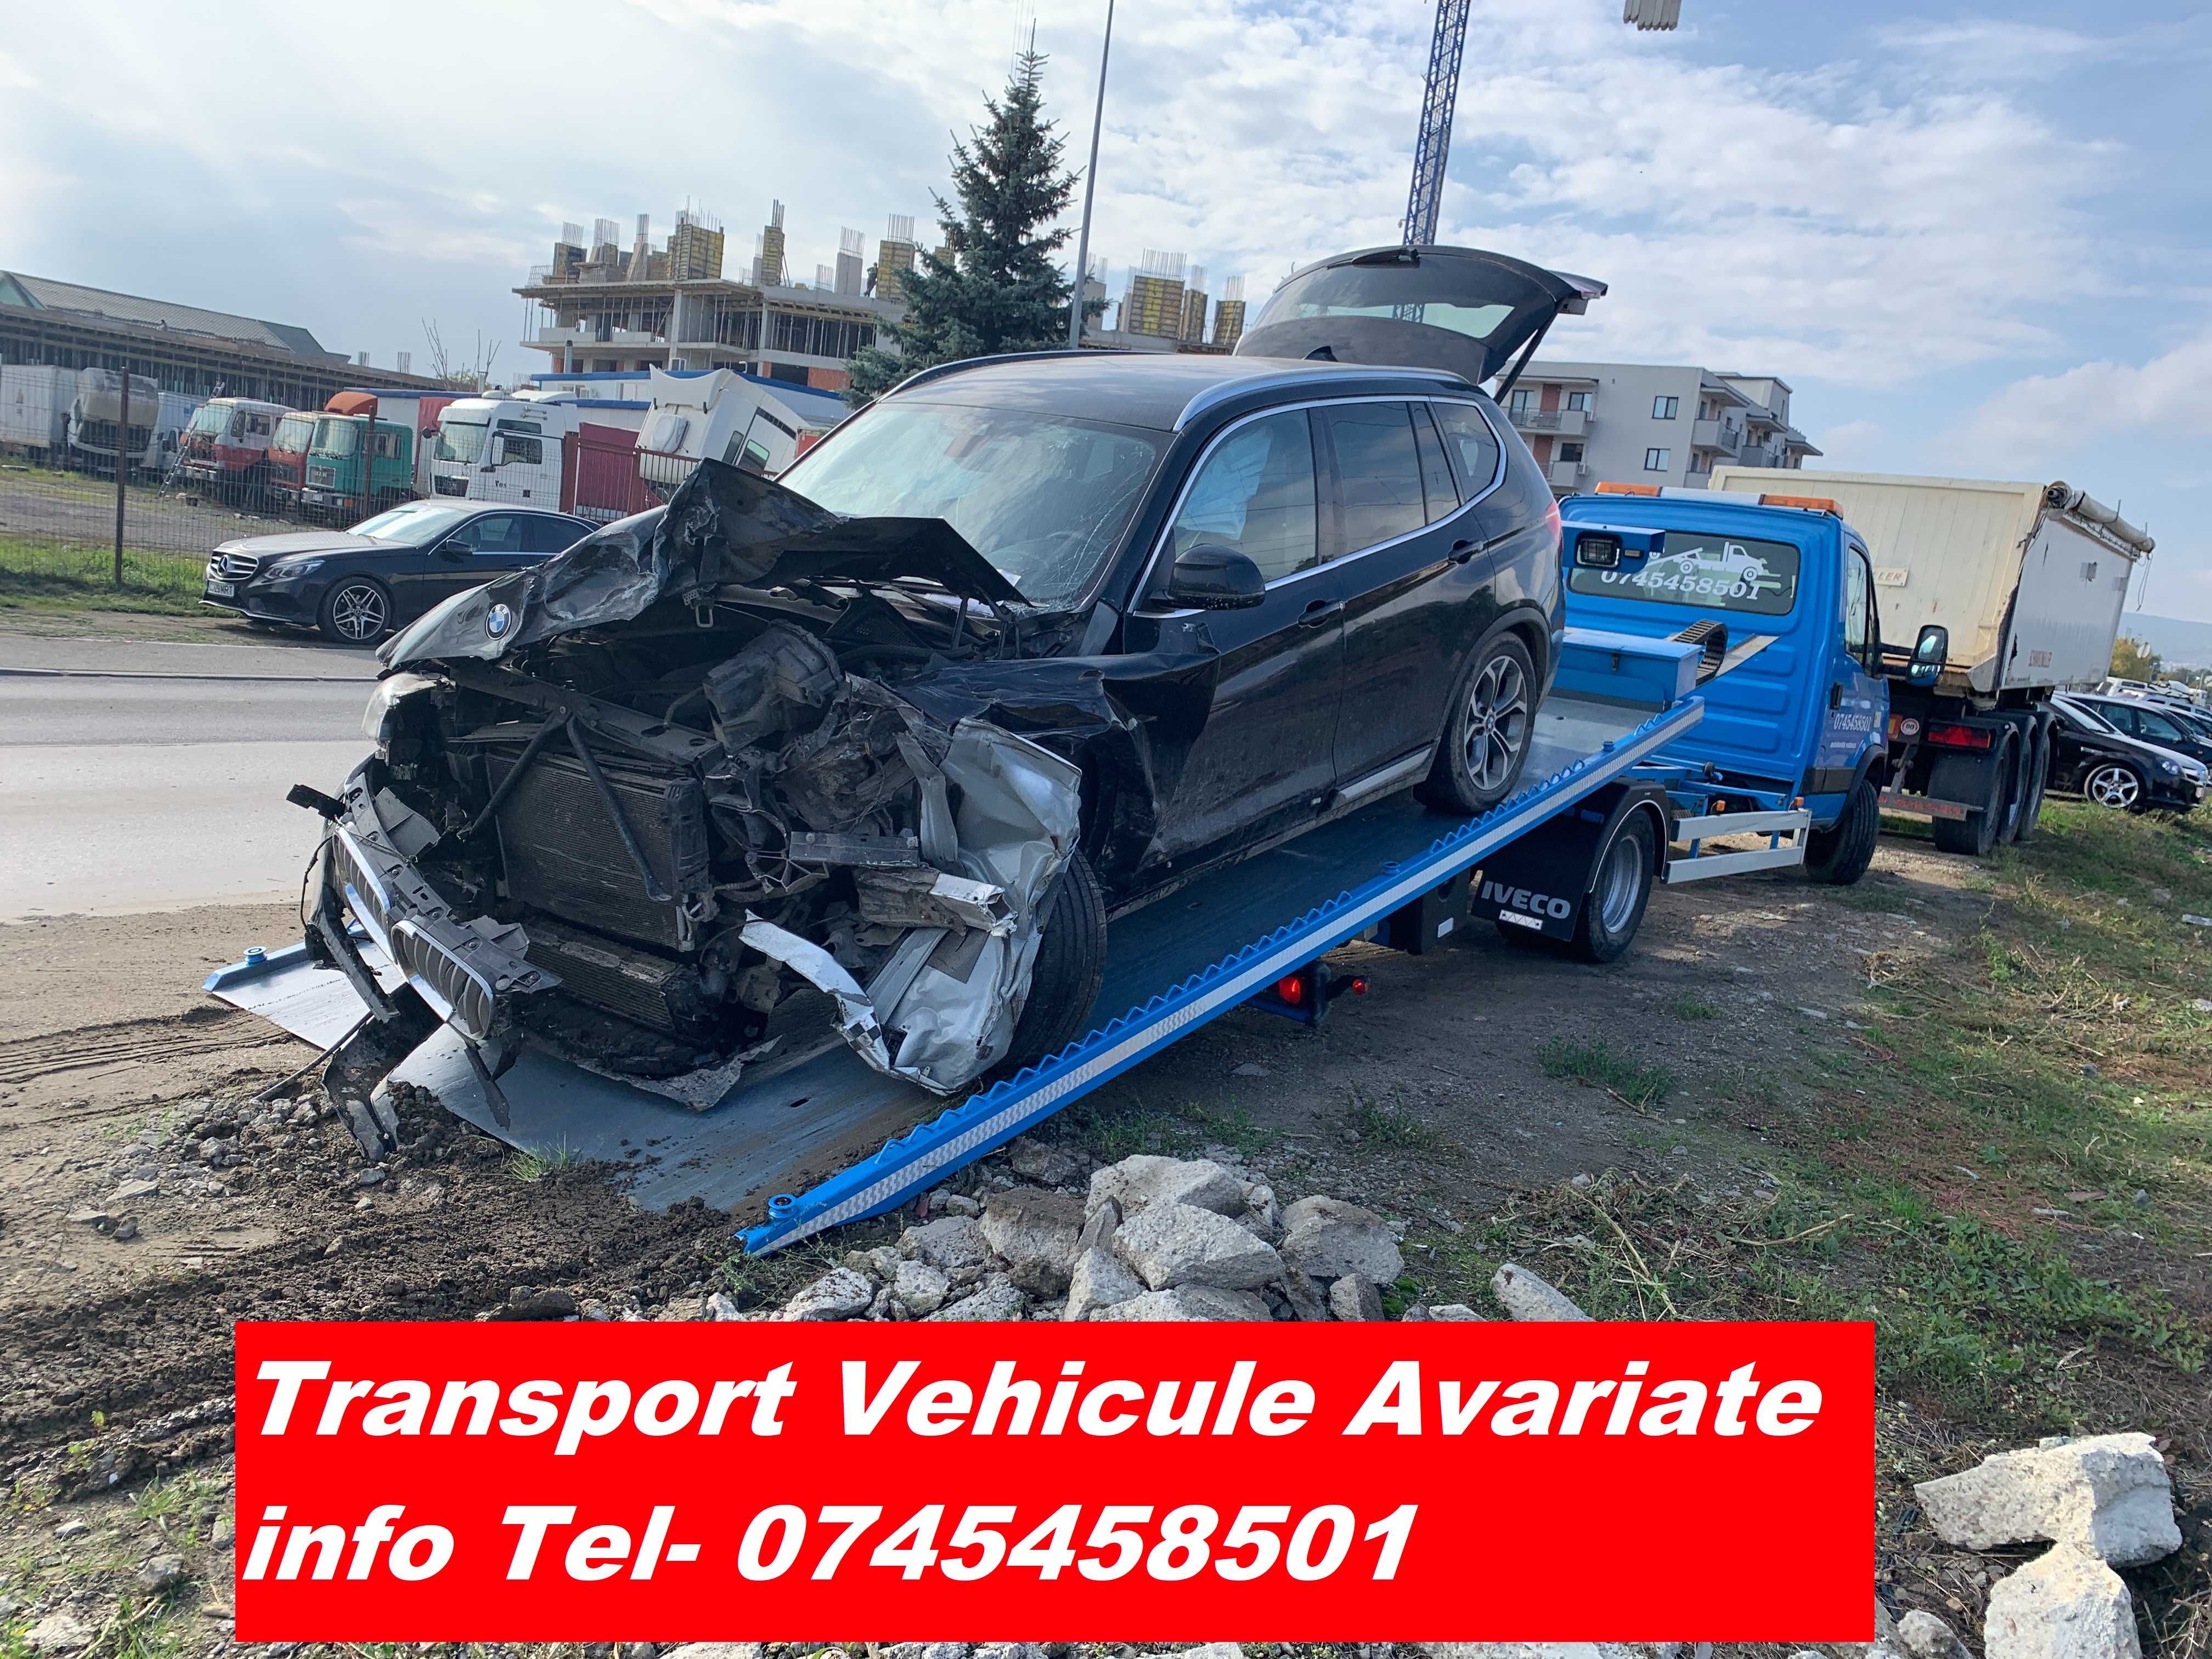 Tractari / Transport  Auto- Moto- Atv -Utilaje